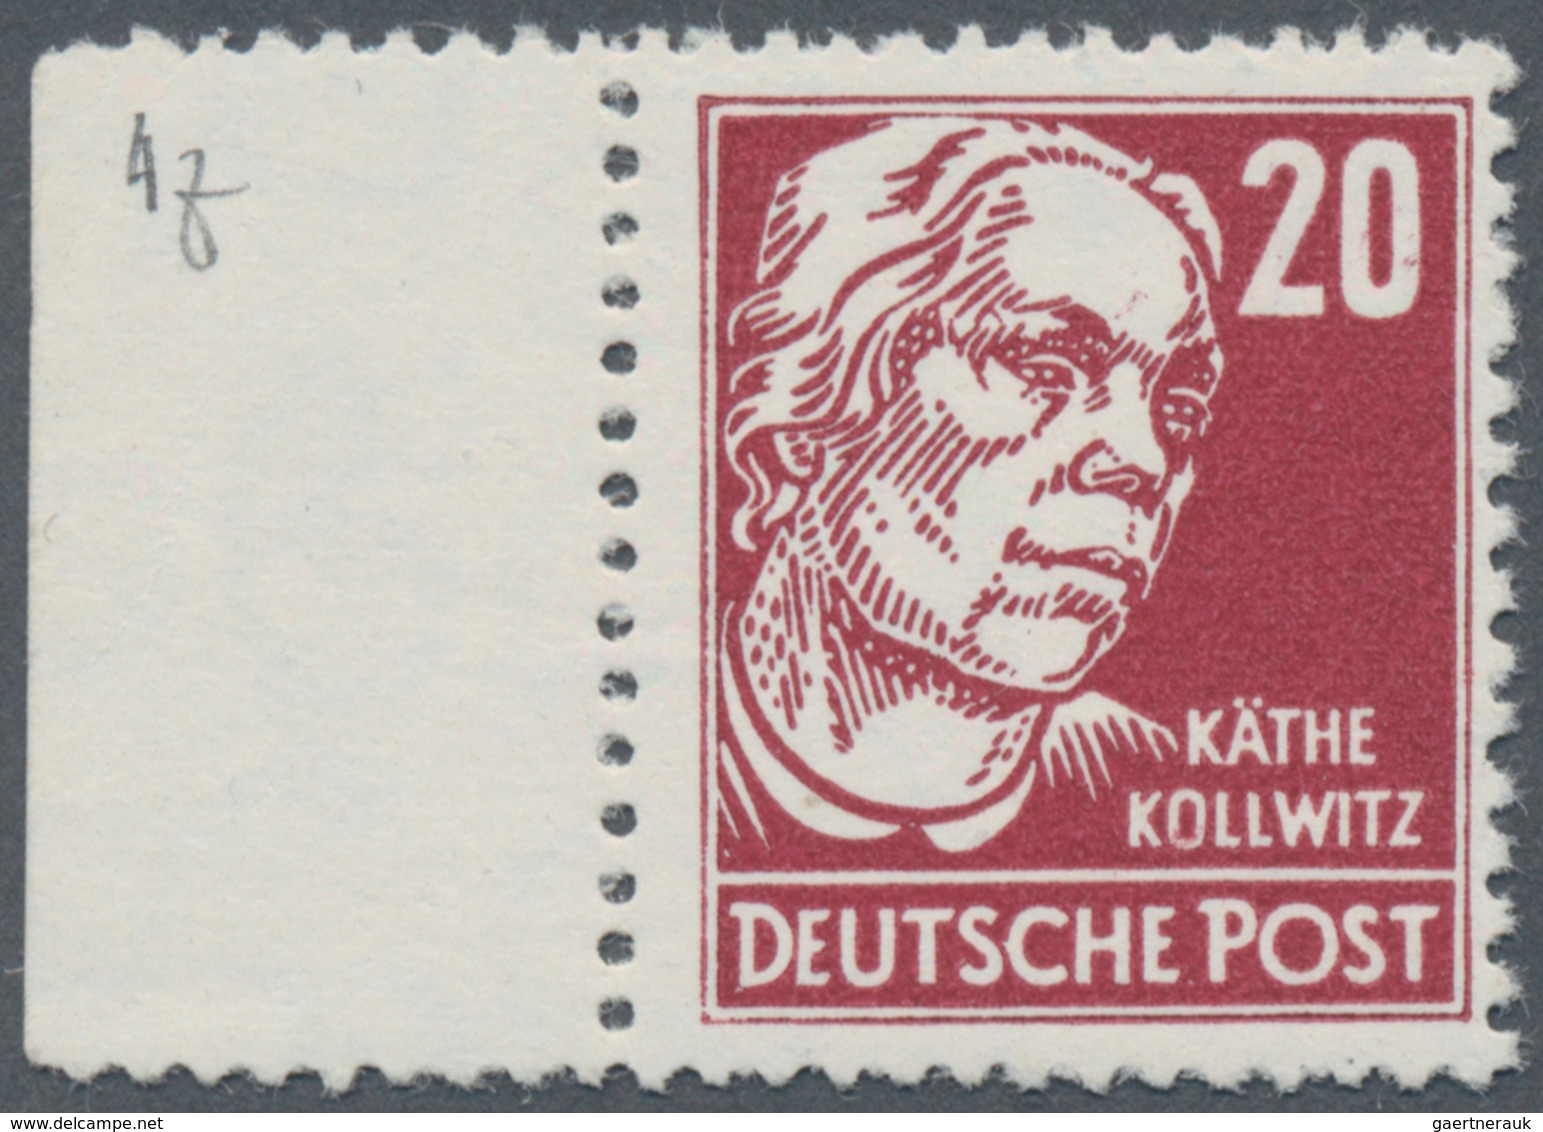 DDR: 1953, 20 Pfg. Köpfe II, Käthe Kollwitz Lebhatkarminrot Auf Gestrichenem Papier Mit Senkrechtem - Briefe U. Dokumente